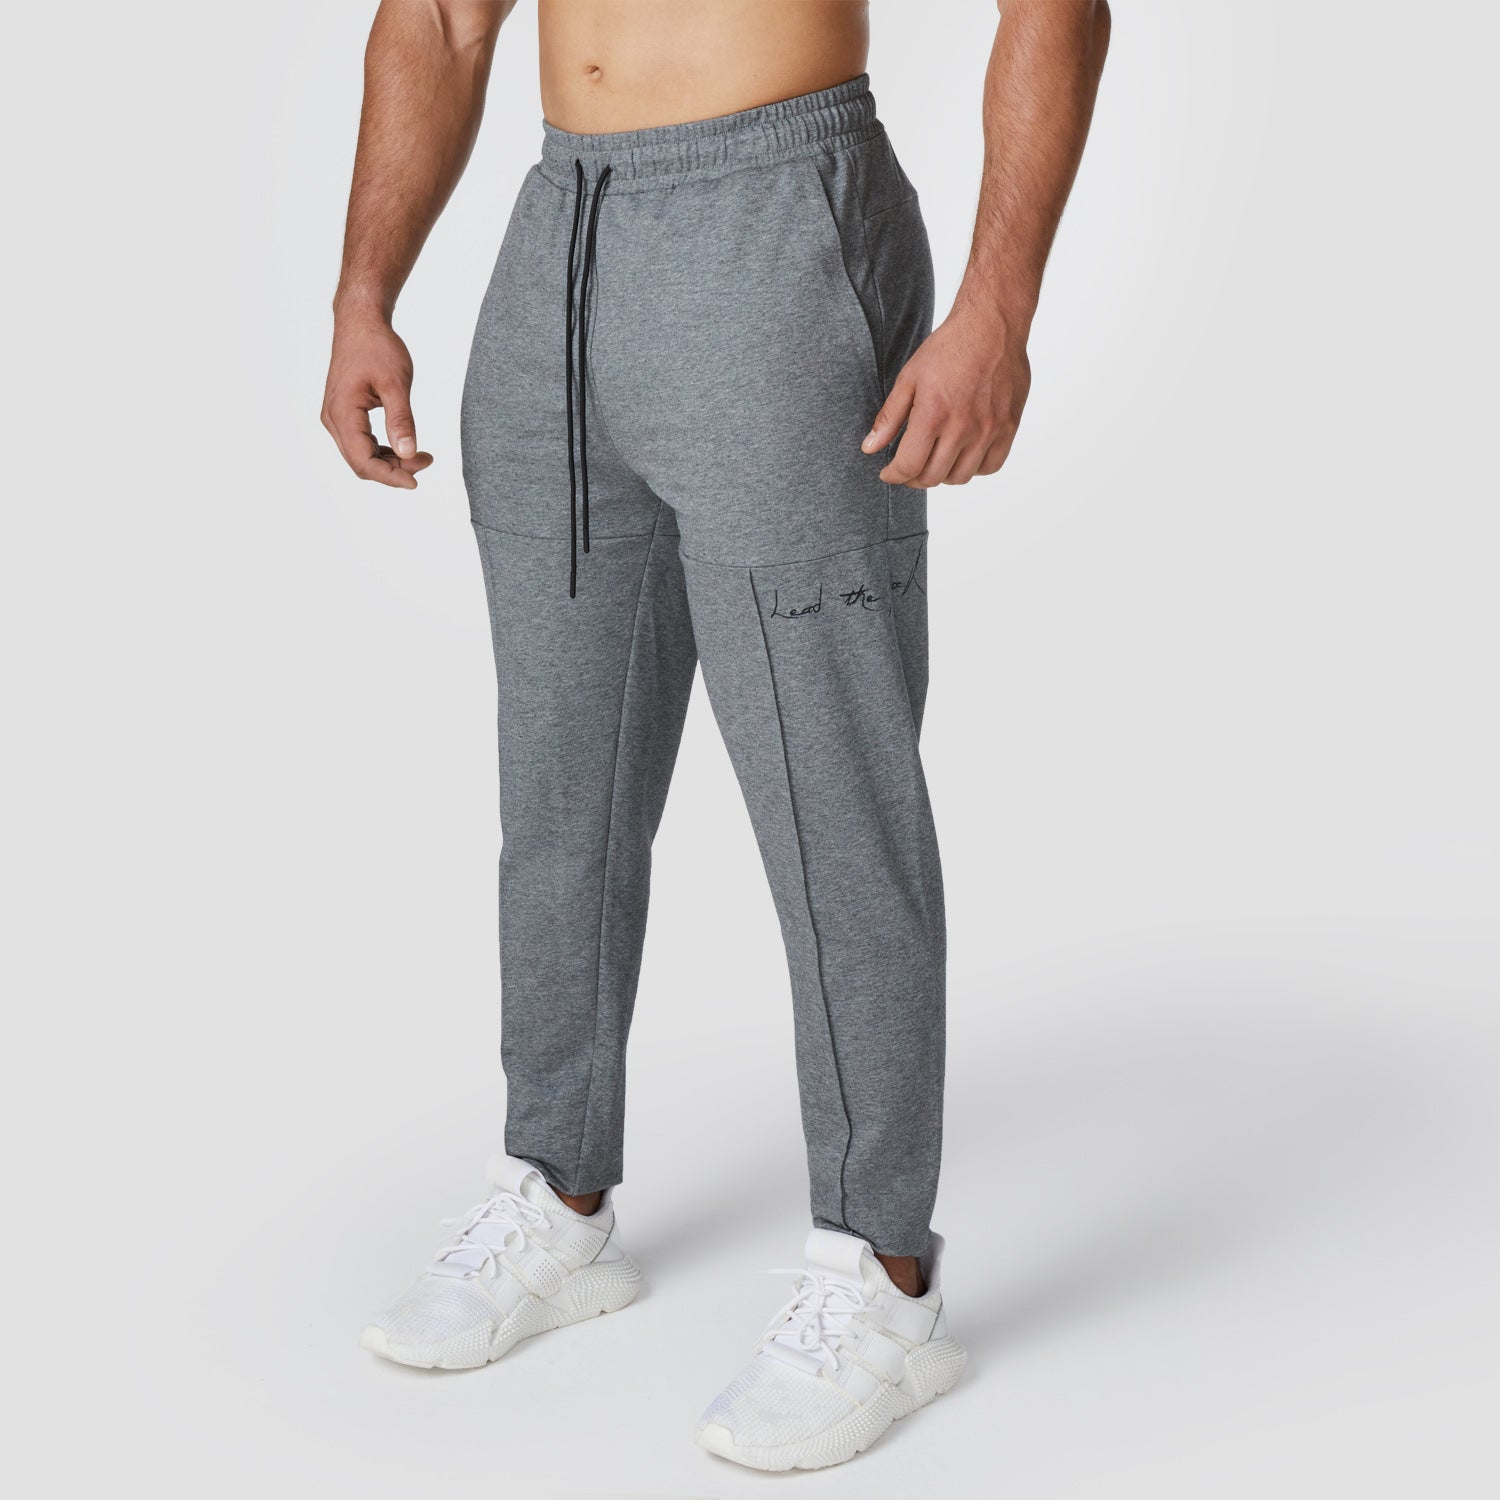 squatwolf-pants-for-men-vibe-jogger-pants-charcoal-marl-workout-gym-wear